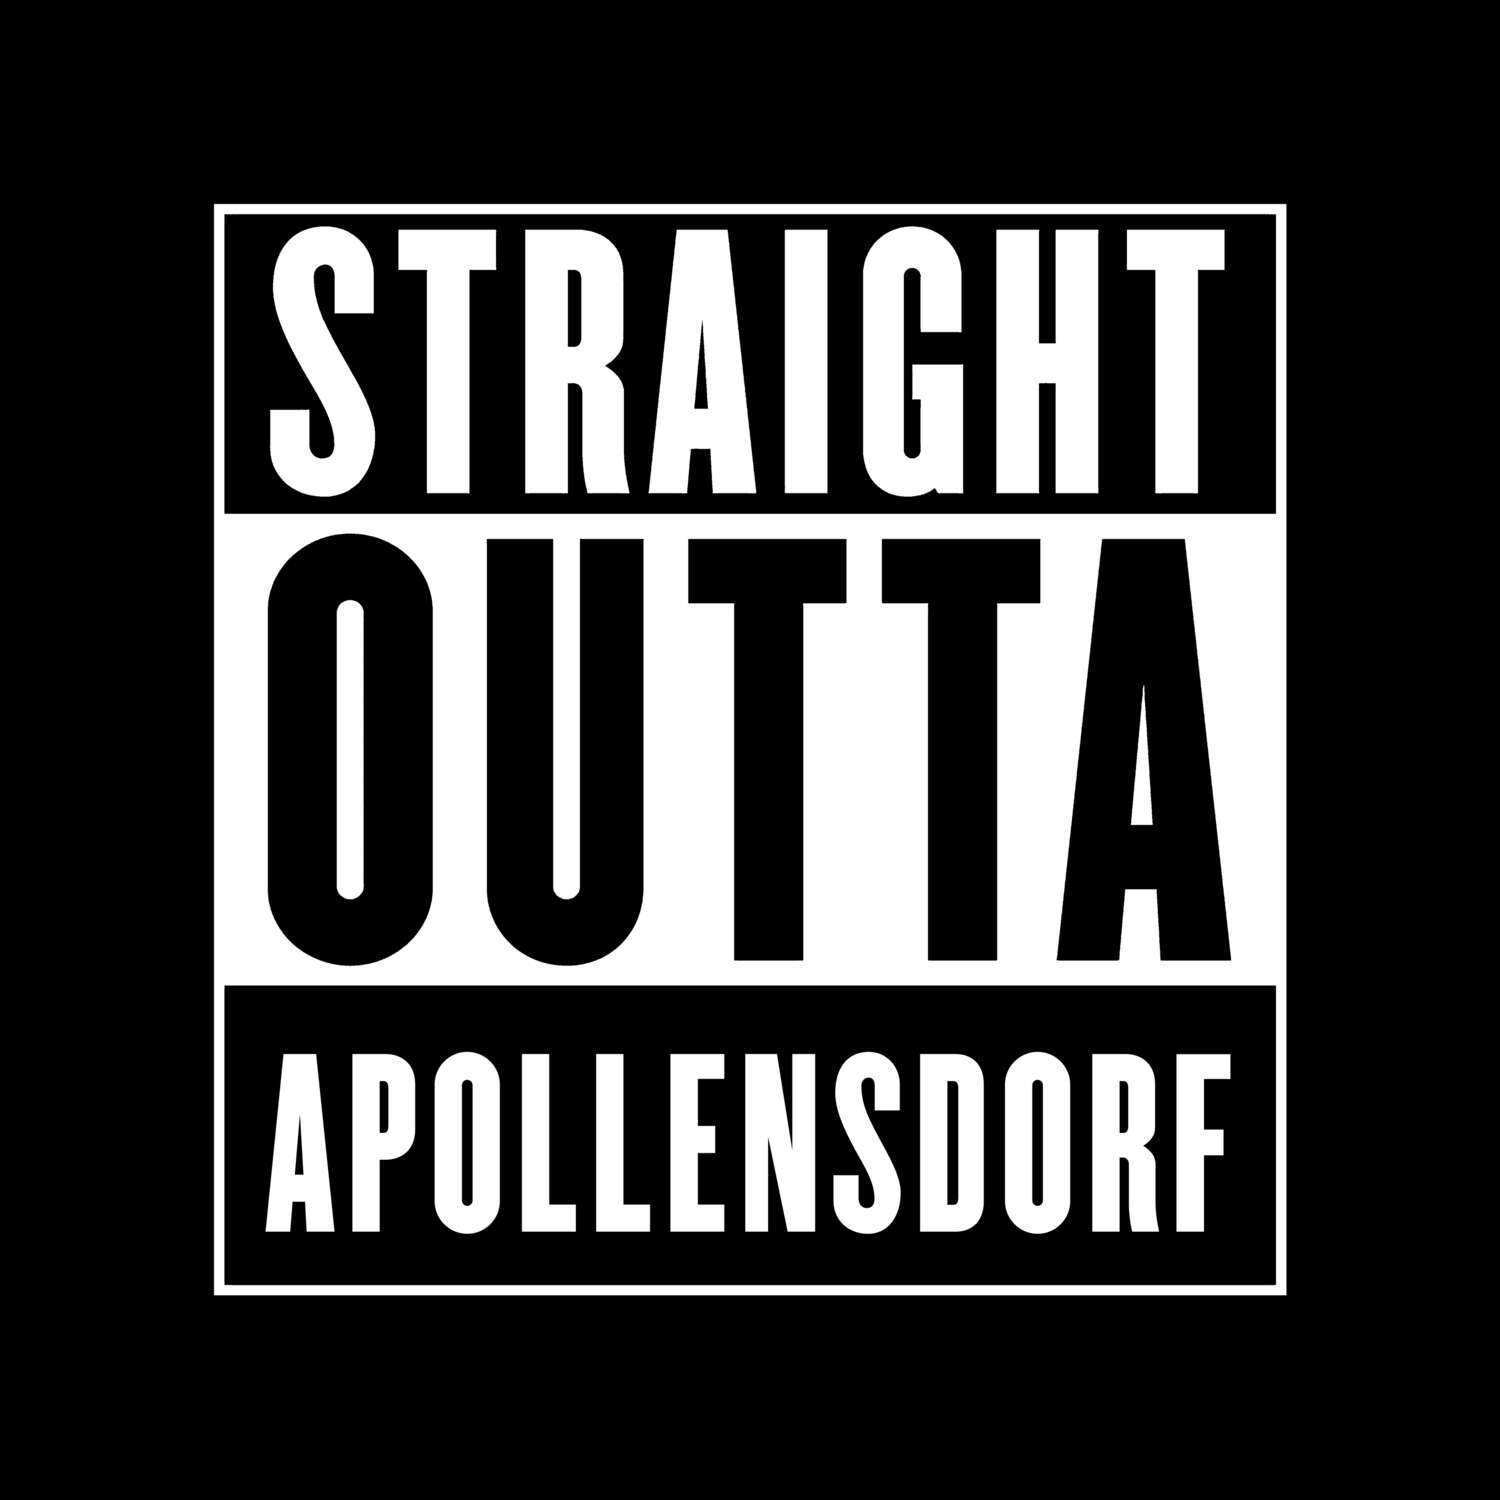 Apollensdorf T-Shirt »Straight Outta«